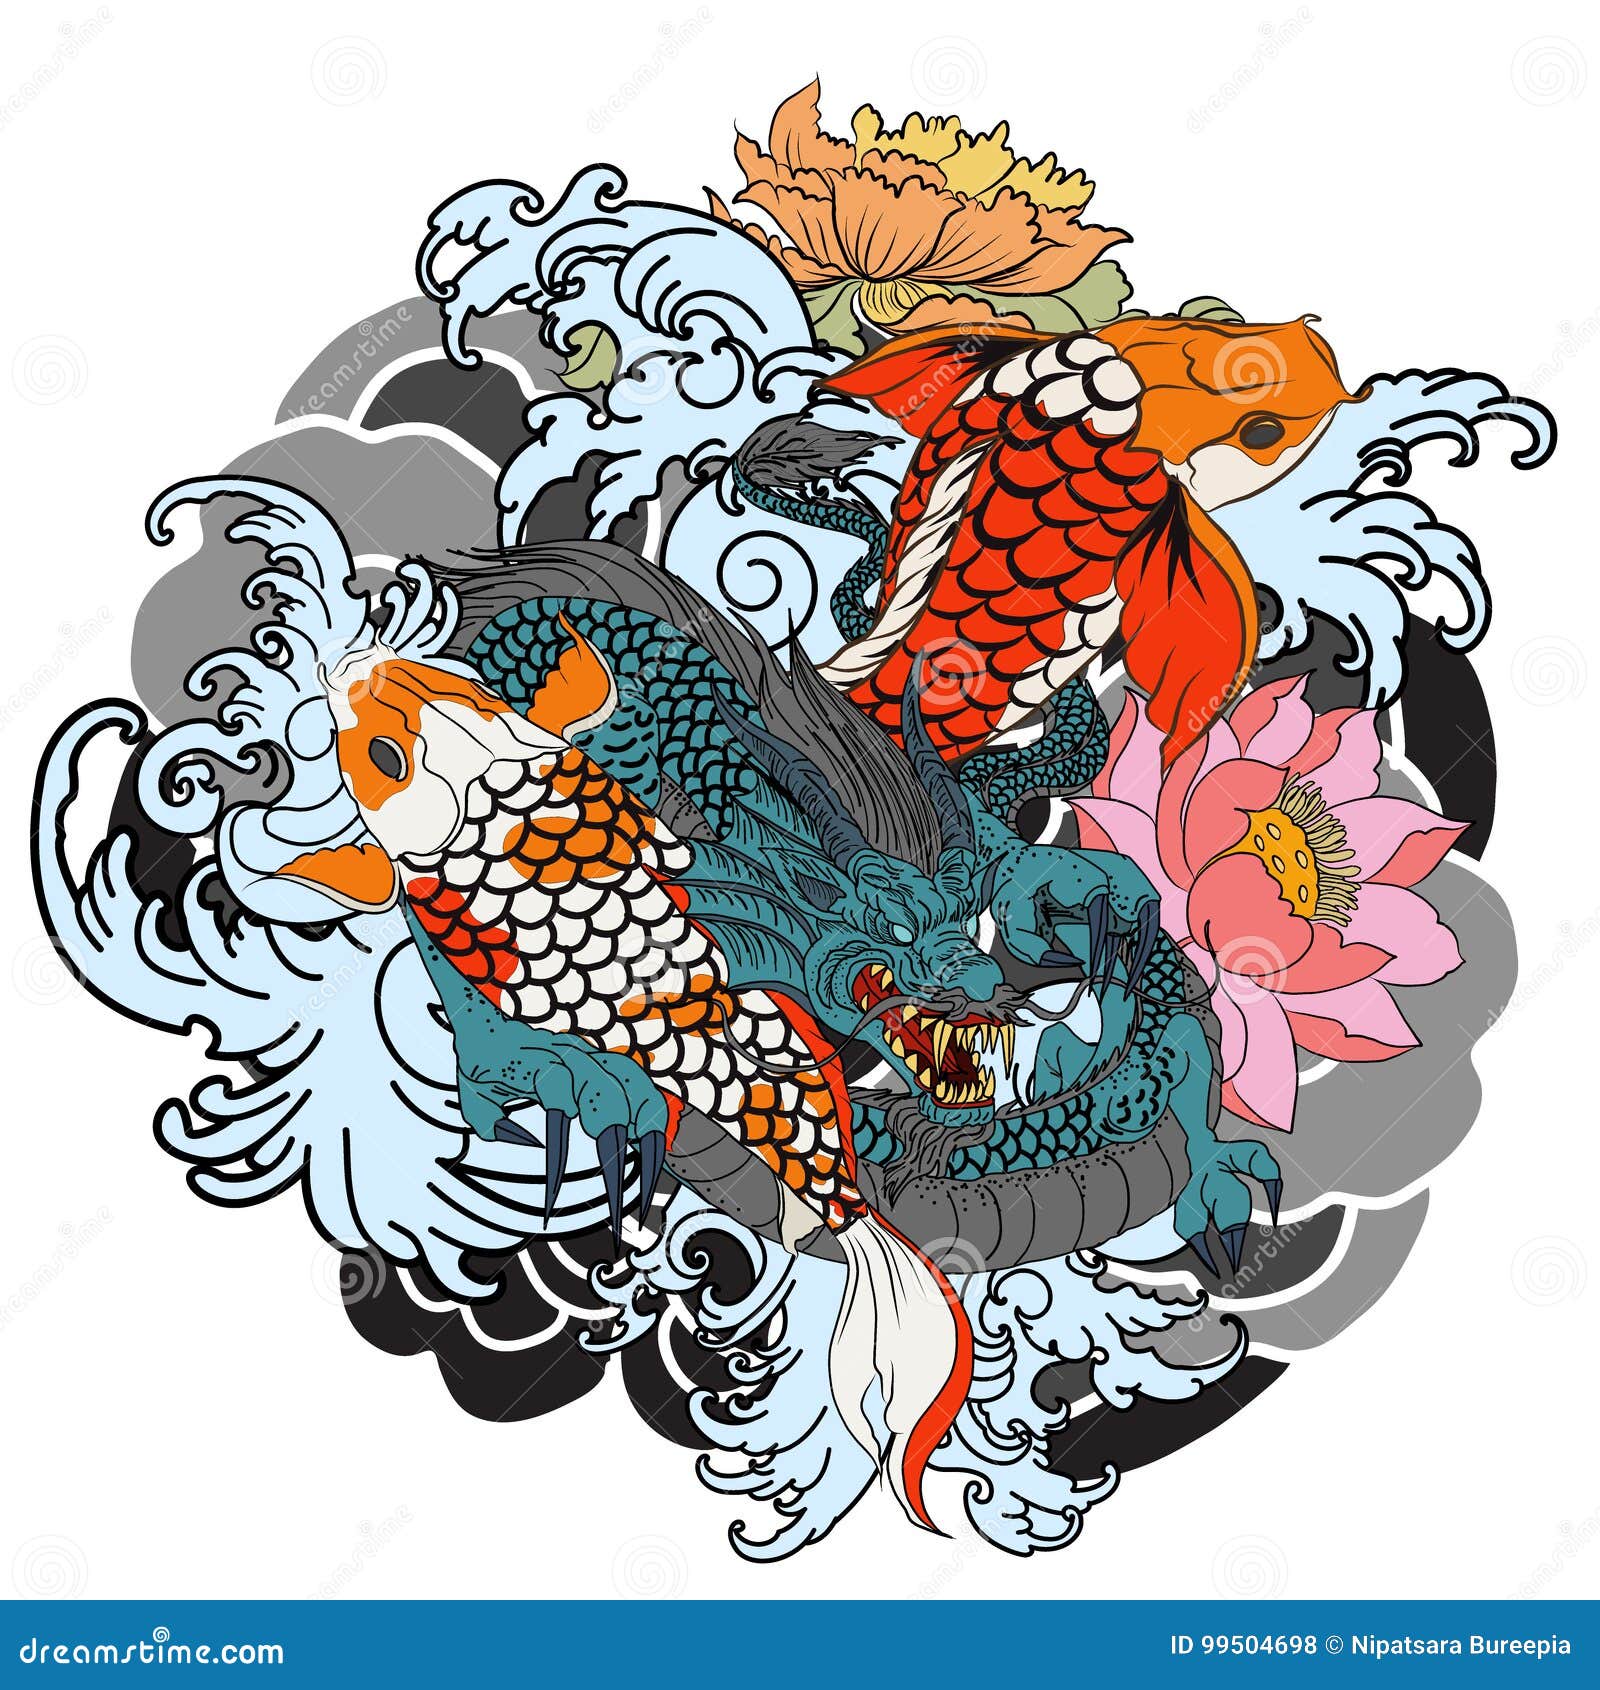 Got a dragon fish tattoo inspired by ichiban himself! : r/yakuzagames